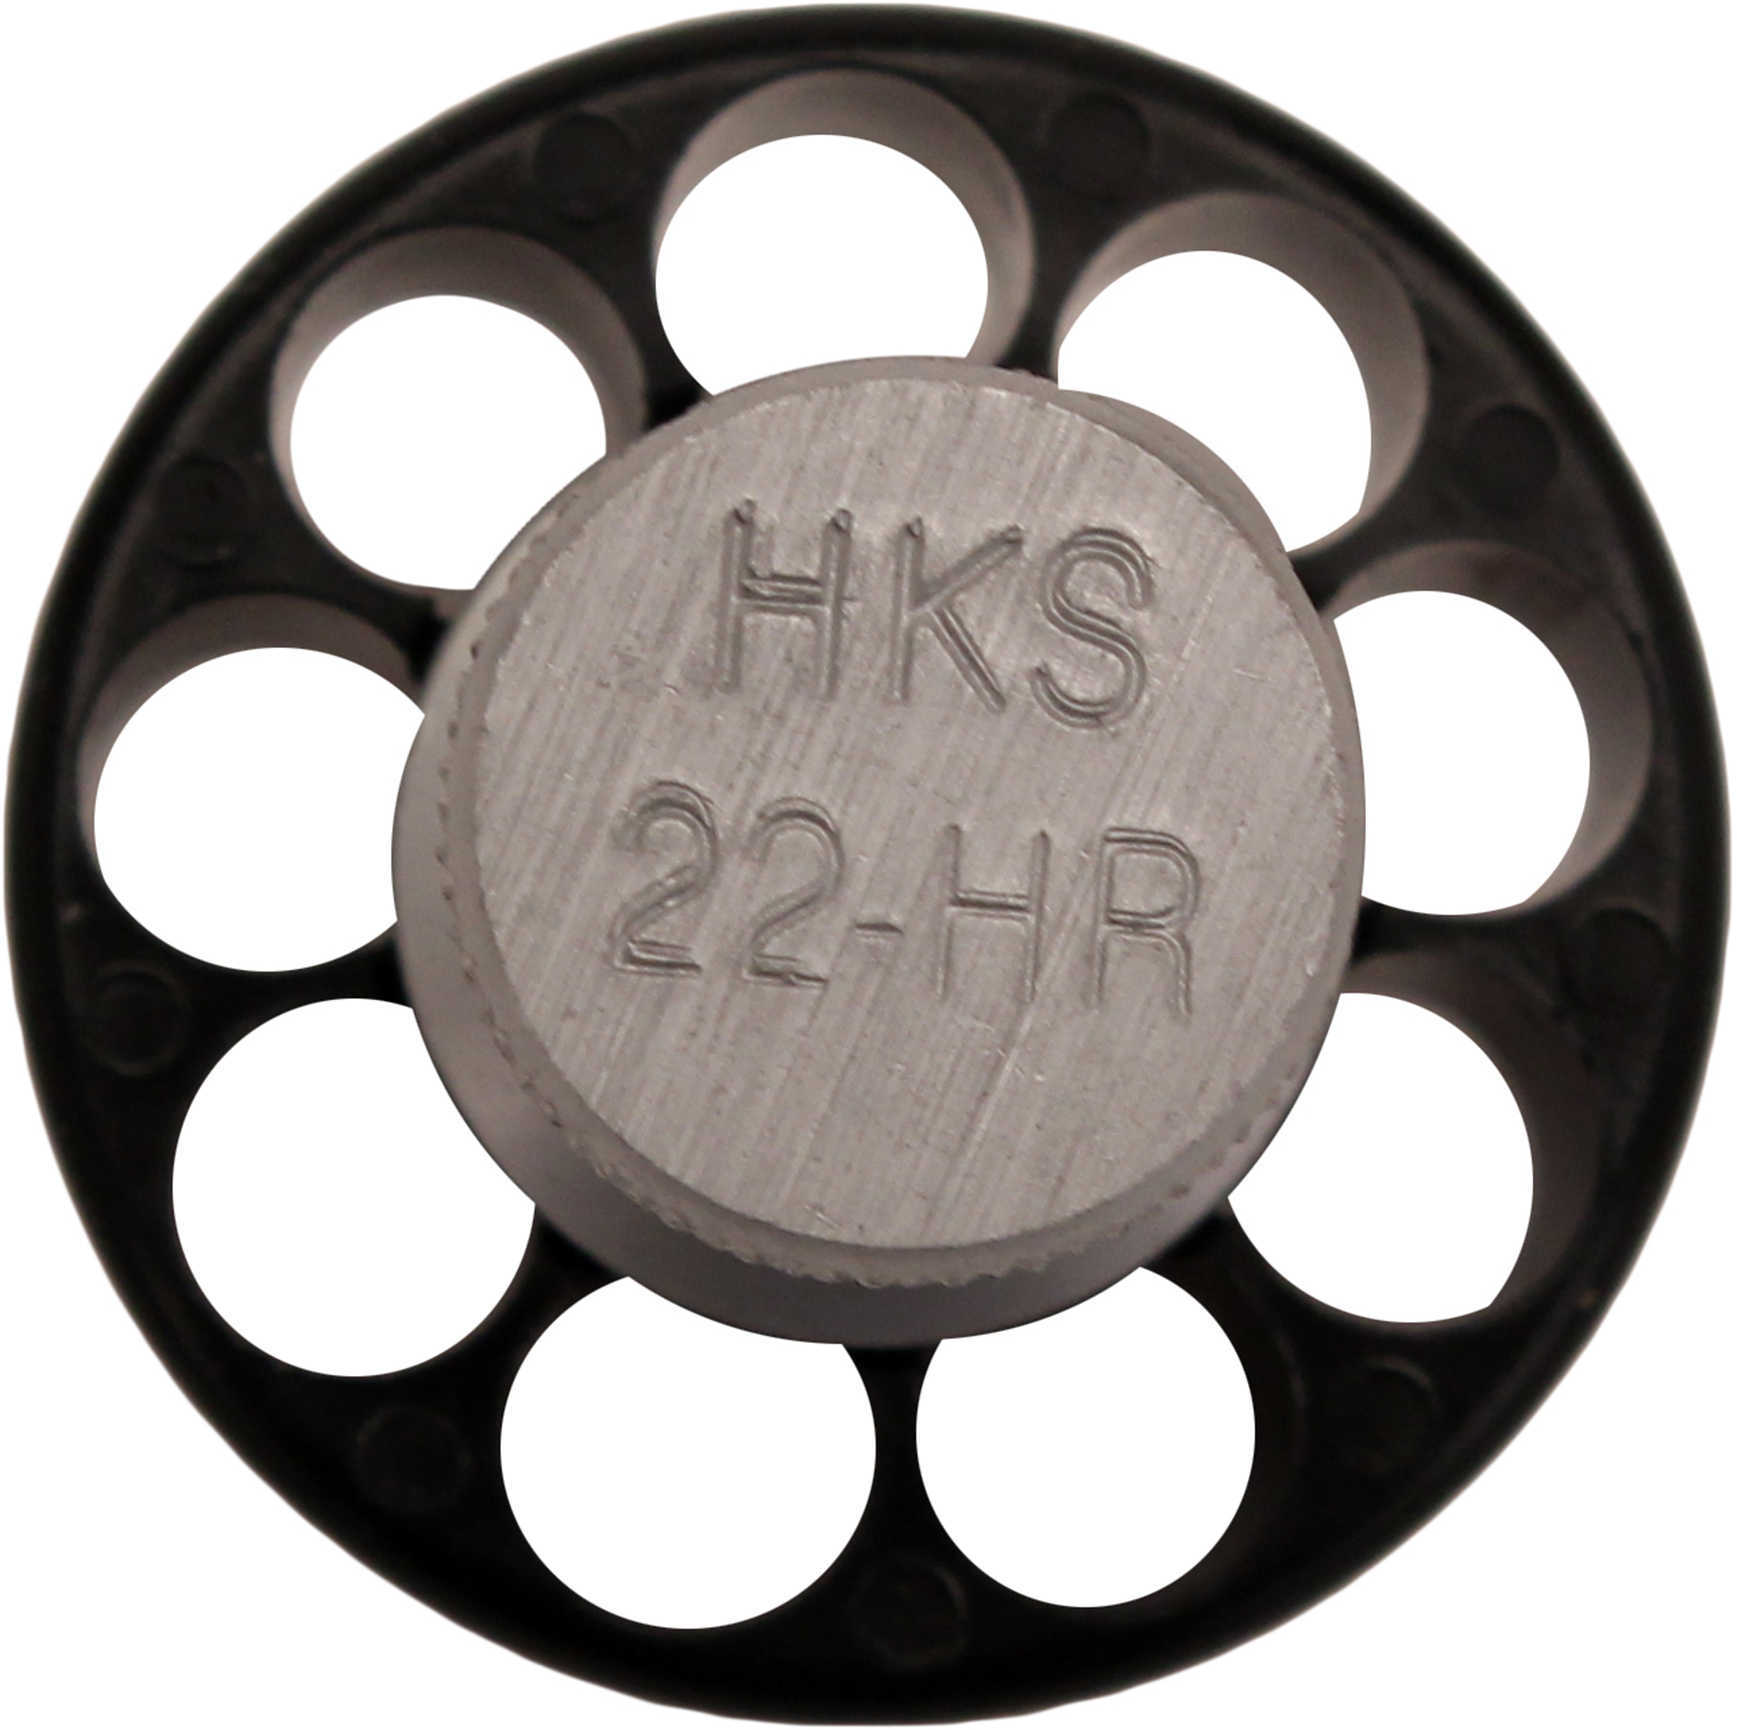 HKS Speedloader For 9 Round H&R & Taurus Model 94 Md: 22HR